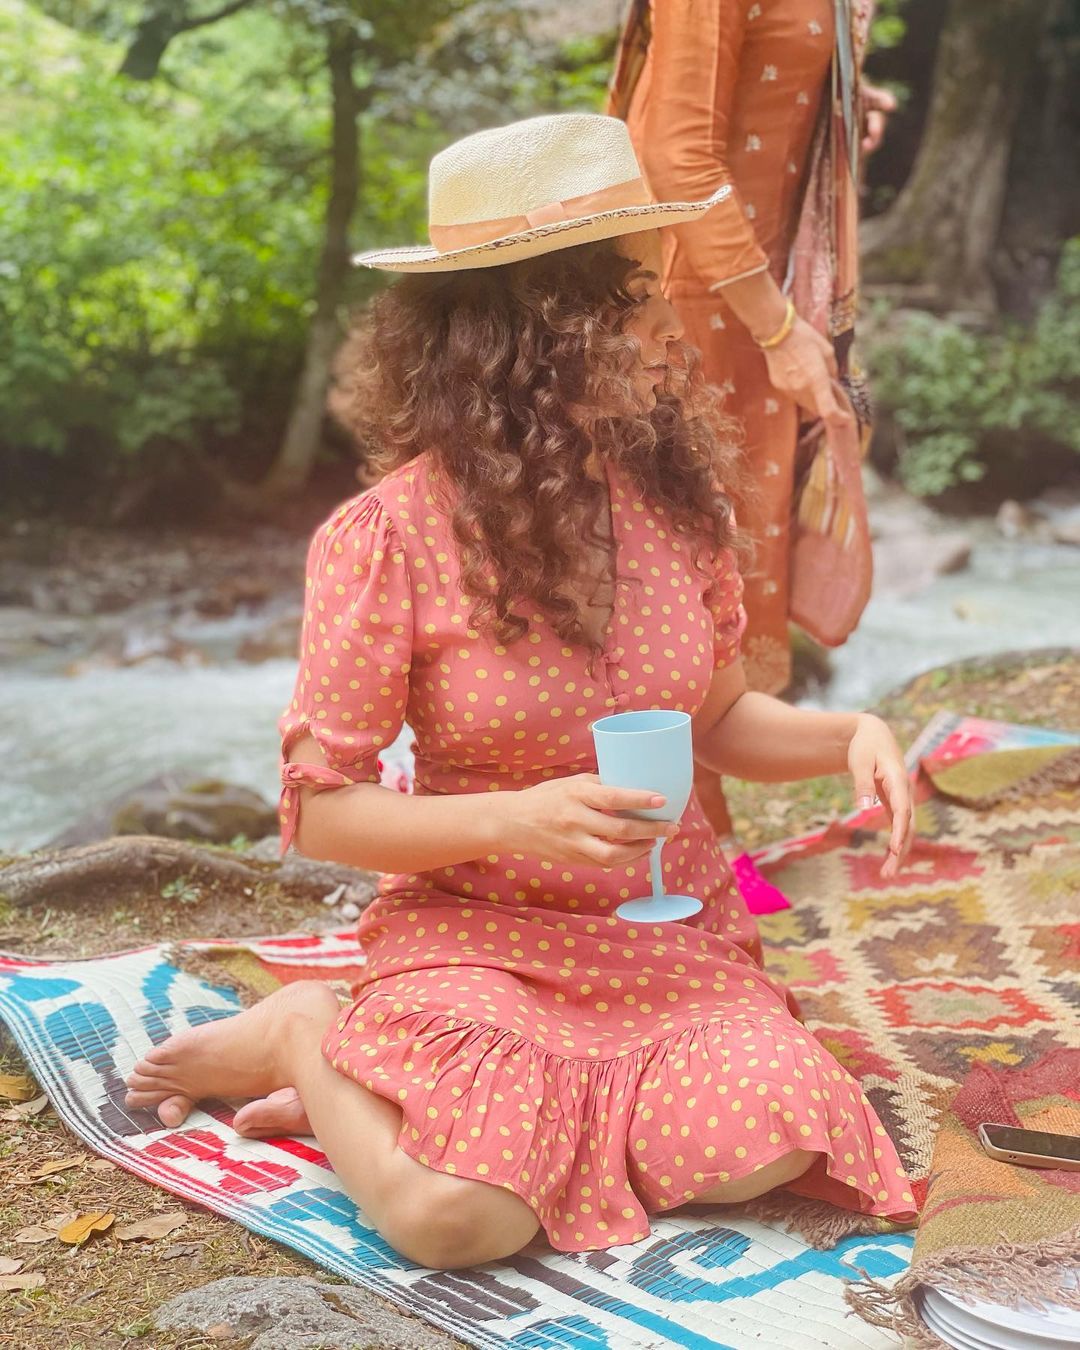 Kangana Ranaut looks lovely in the polka-dot summer dress and straw hat.